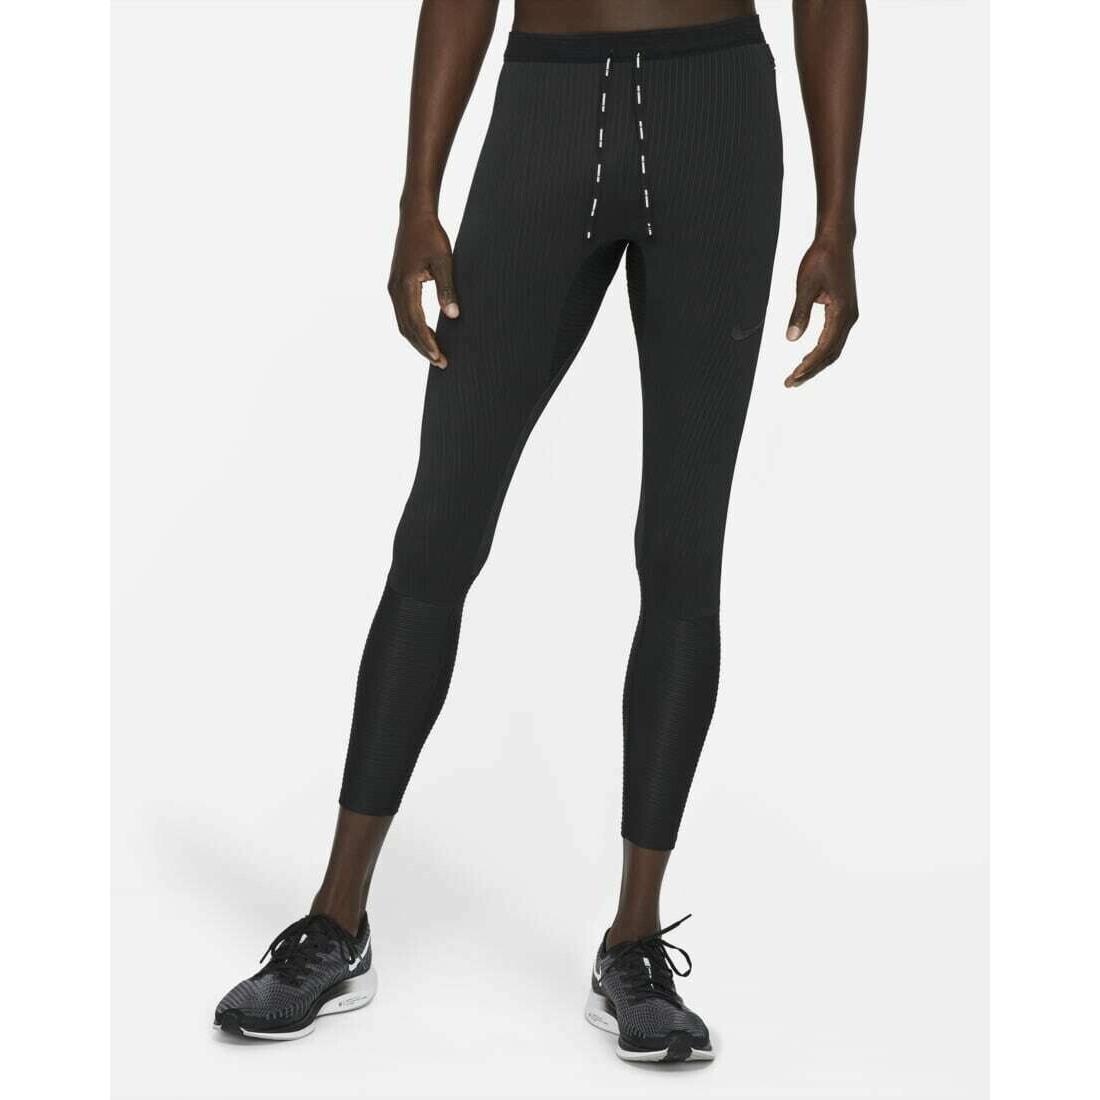 Nike Dri-fit Swift Running Tights Full Length Run Pants Black Medium